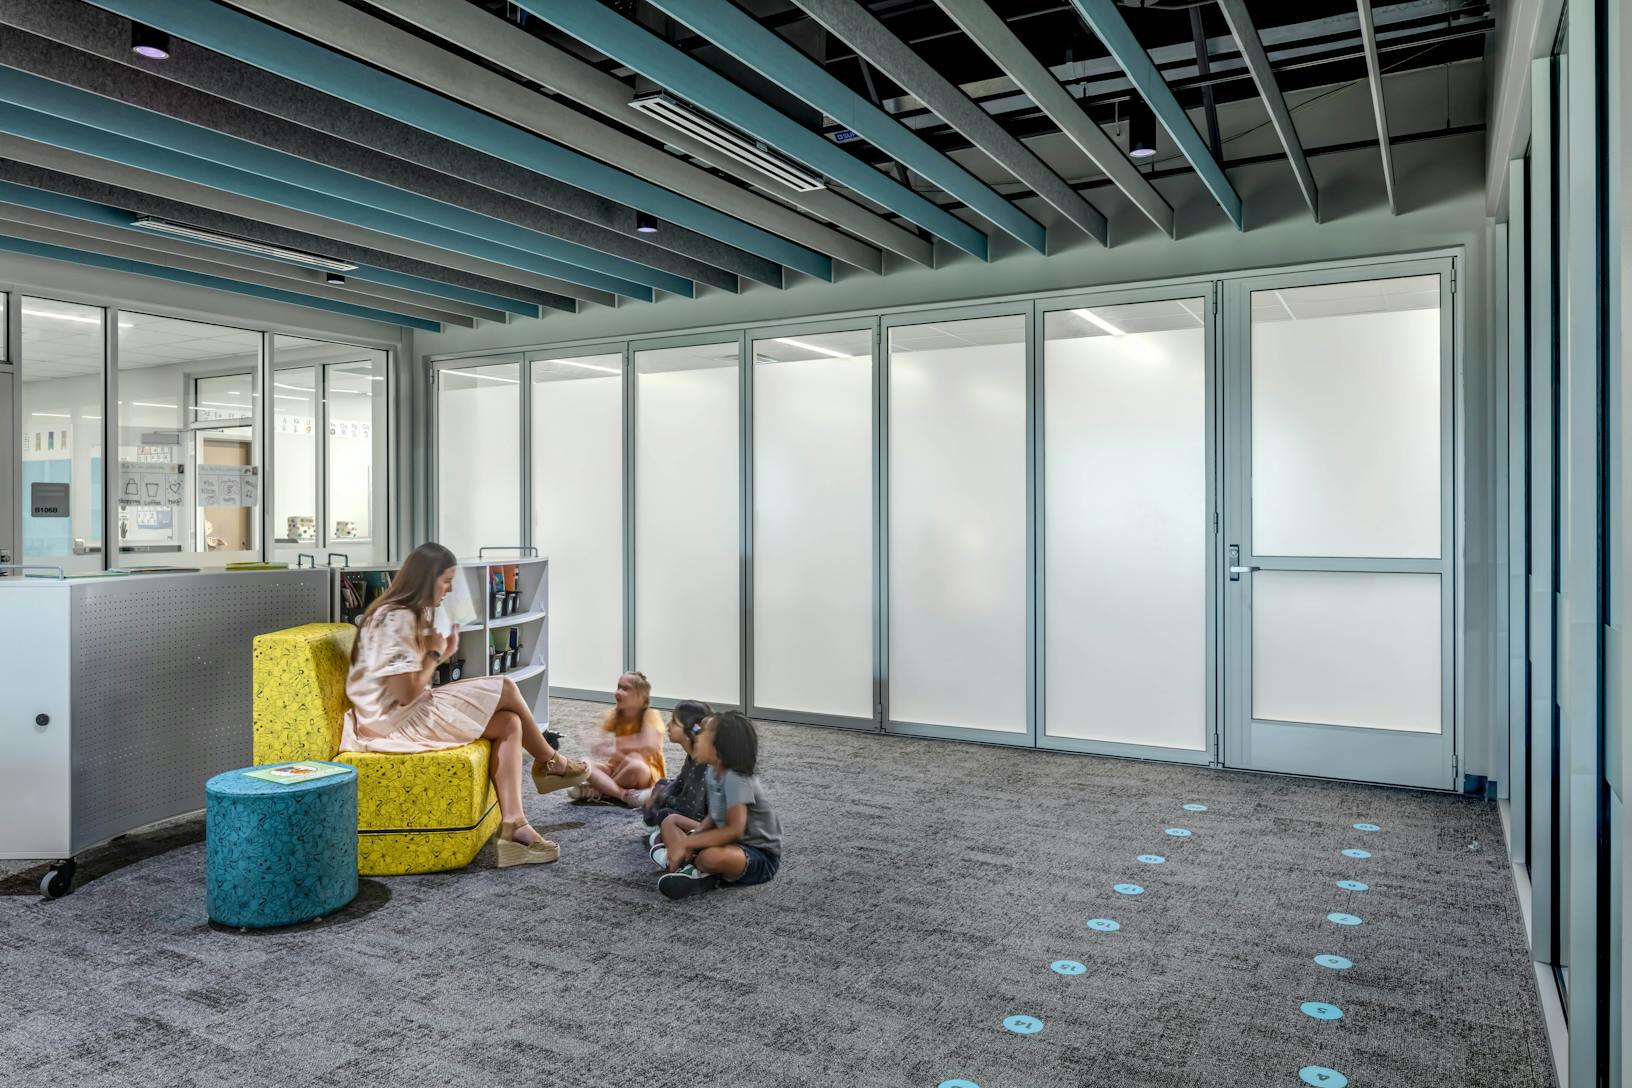 Folding glass walls in a classroom collaborative environment - Closed interior